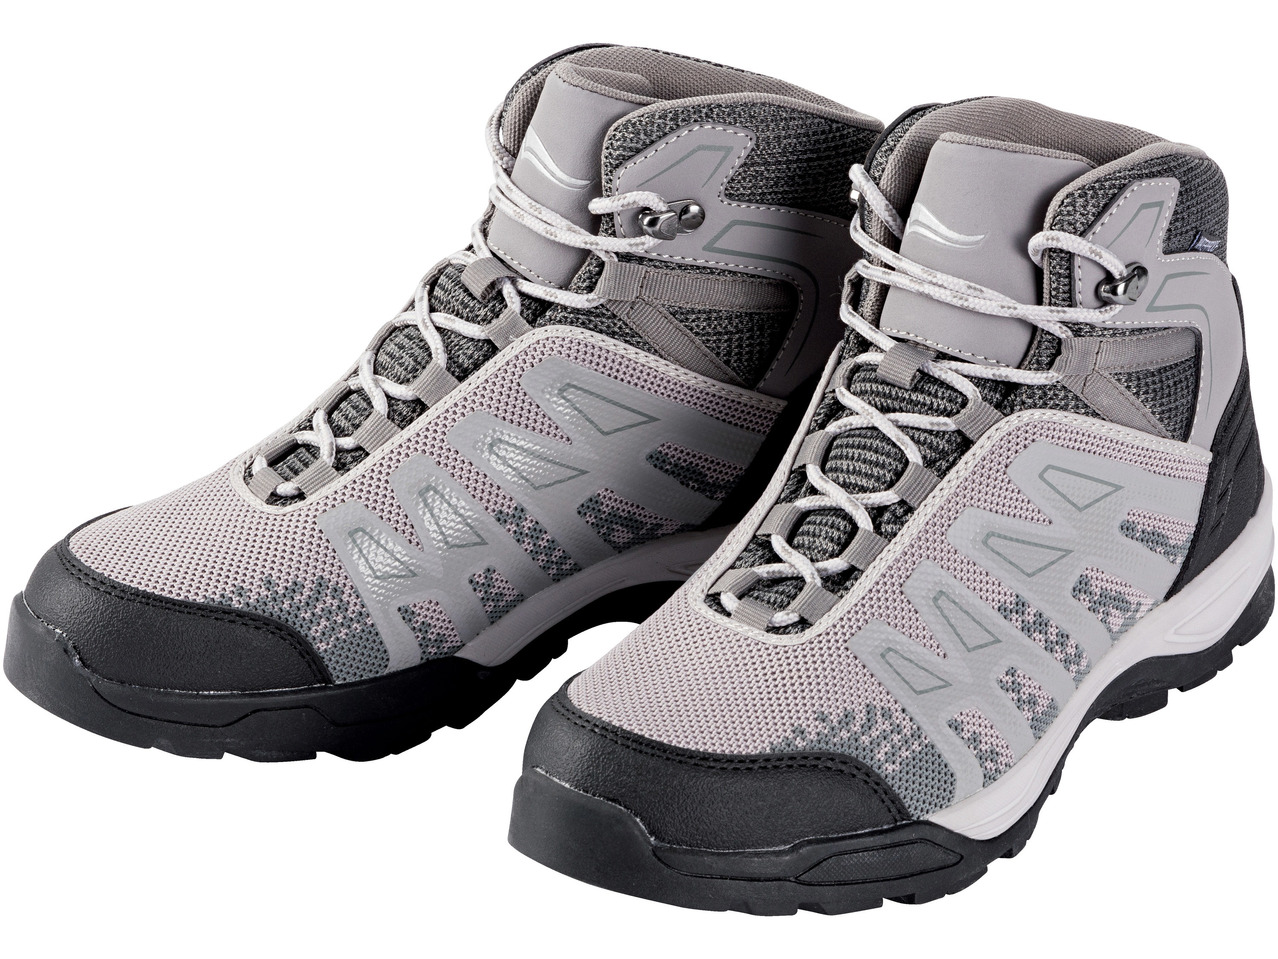 Ladies' Hiking Boots